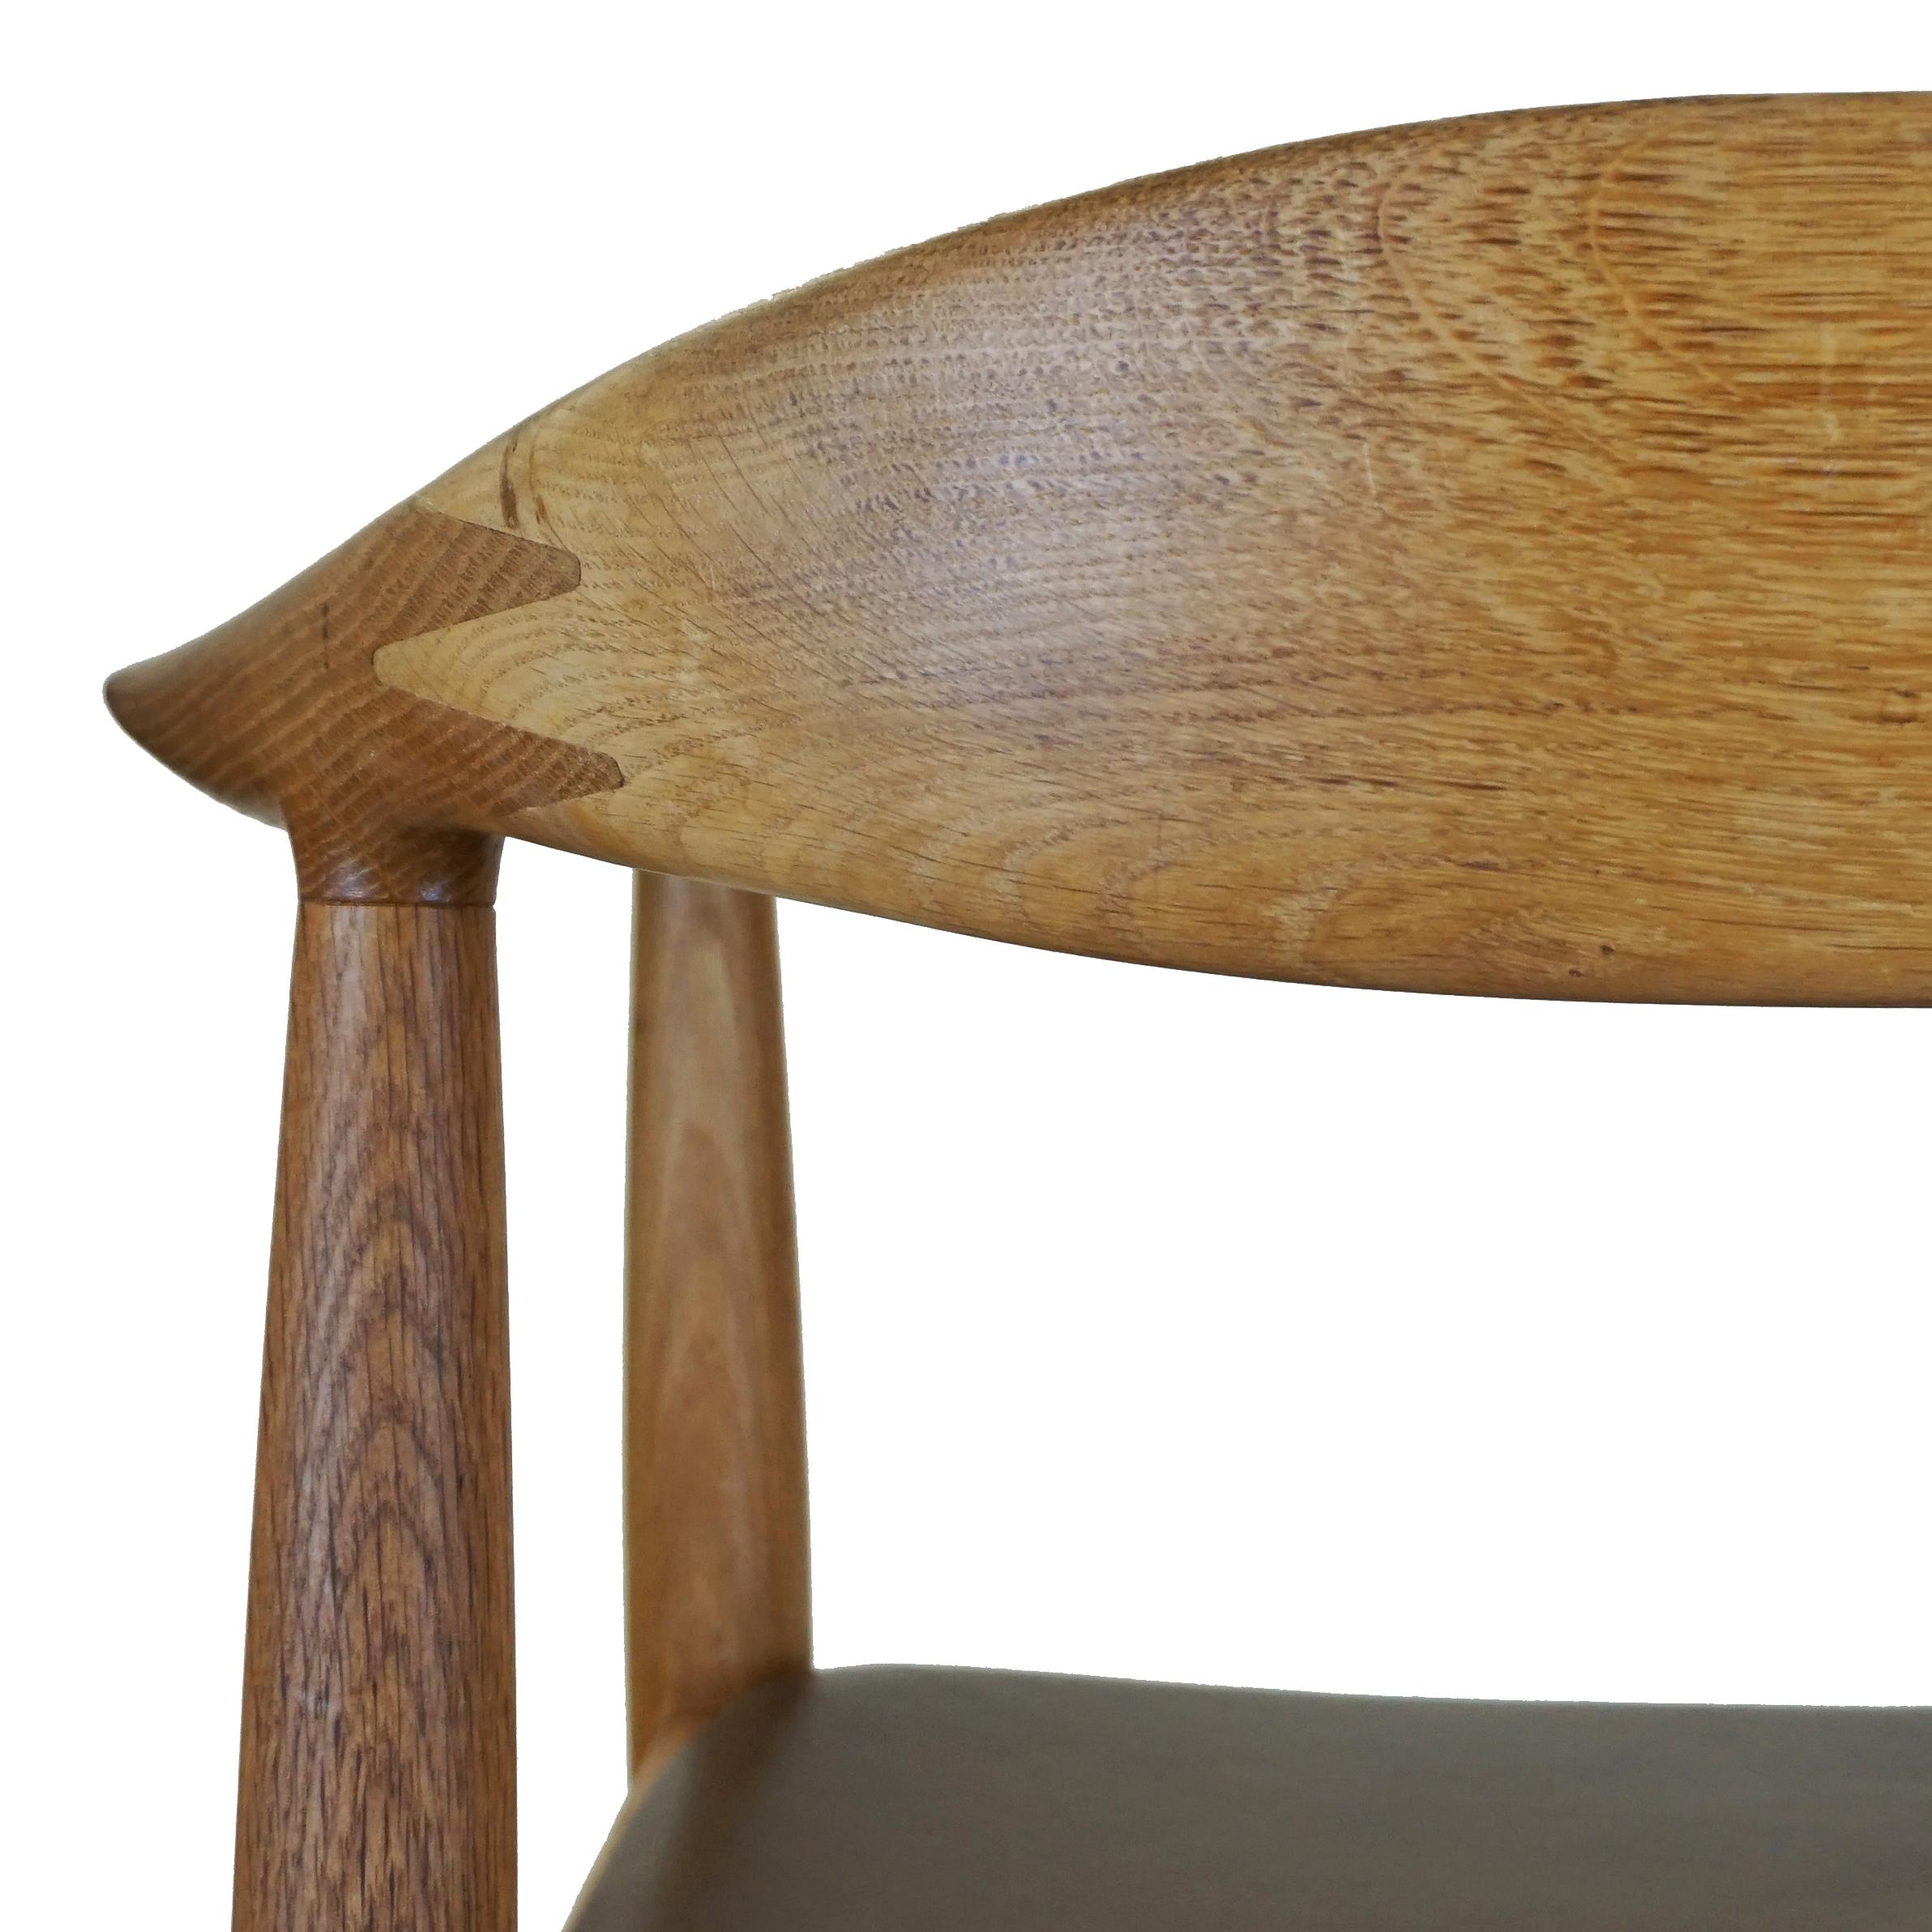 'The Chair' designed by Hans Wegner for Johannes Hansen, Denmark In Good Condition For Sale In Wilton, CT